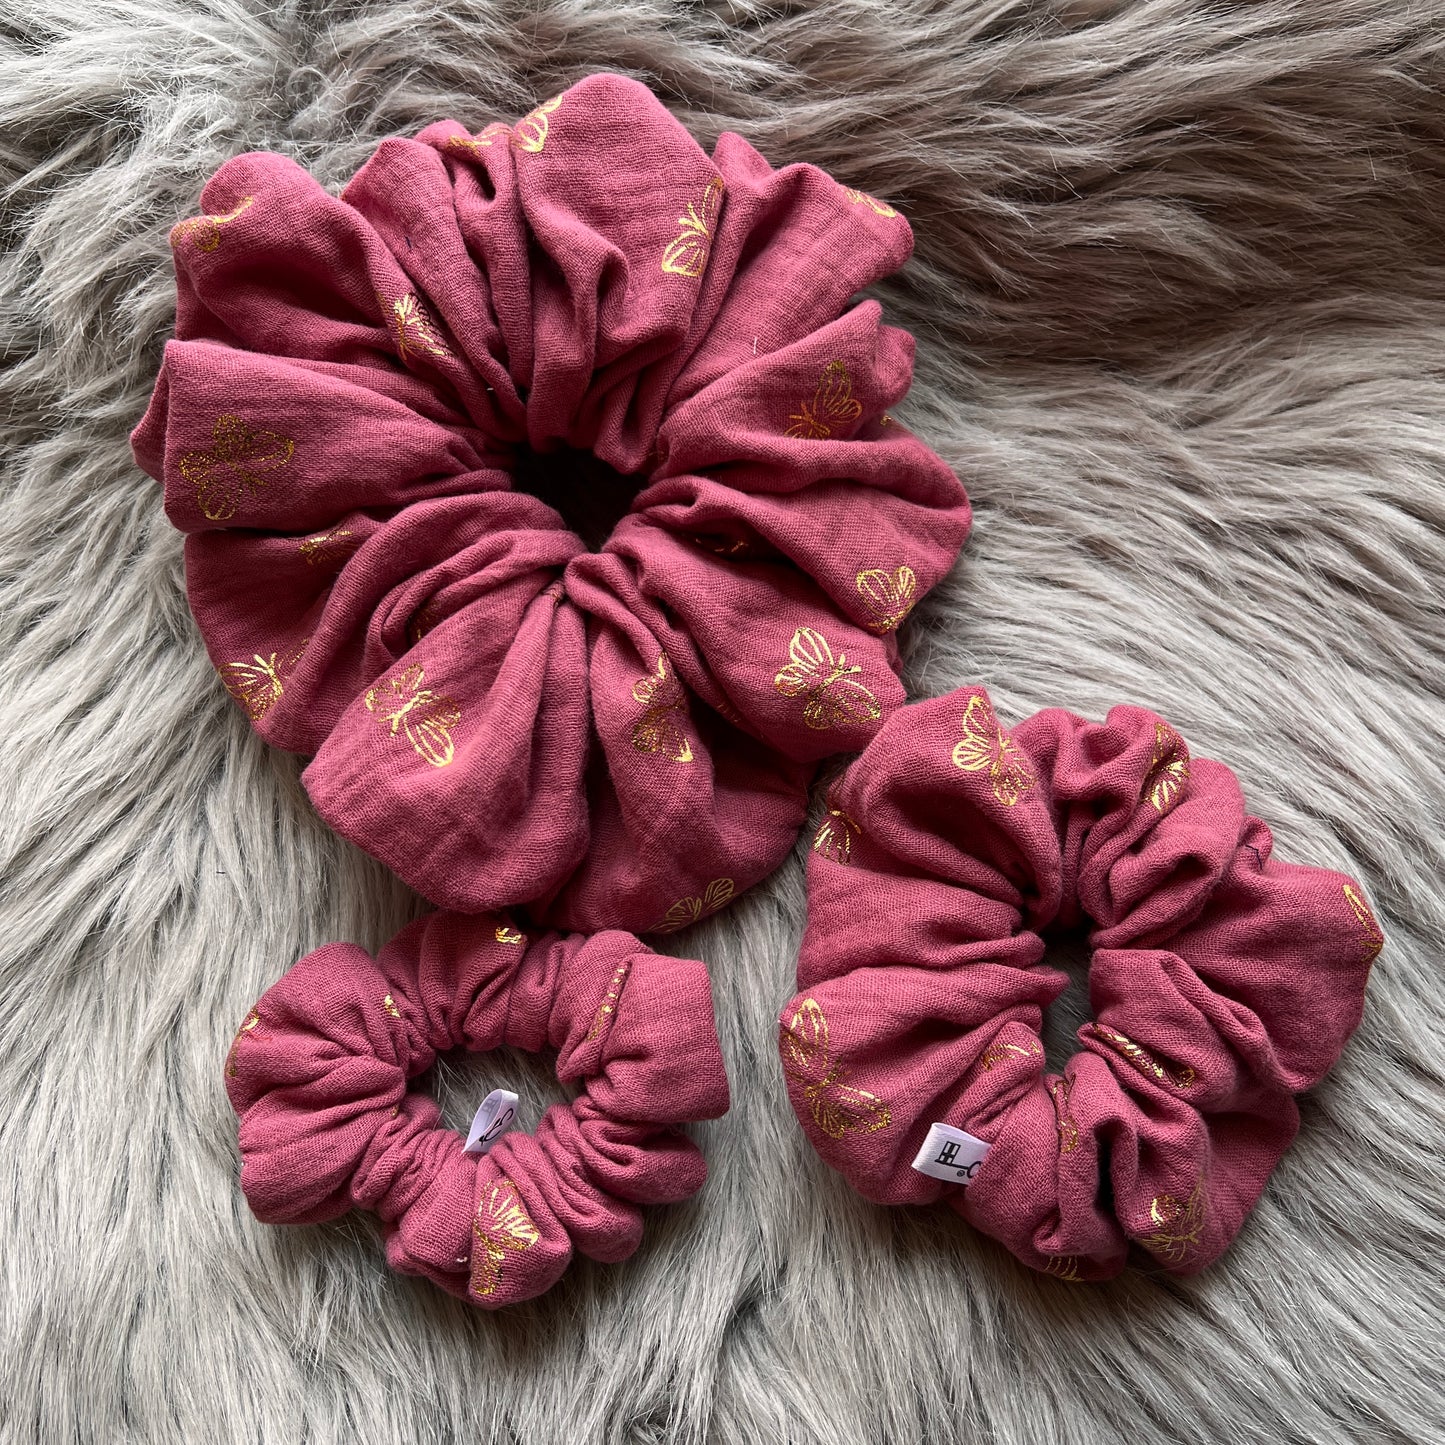 Taru - roosa harso scrunchie kultaisilla perhosilla